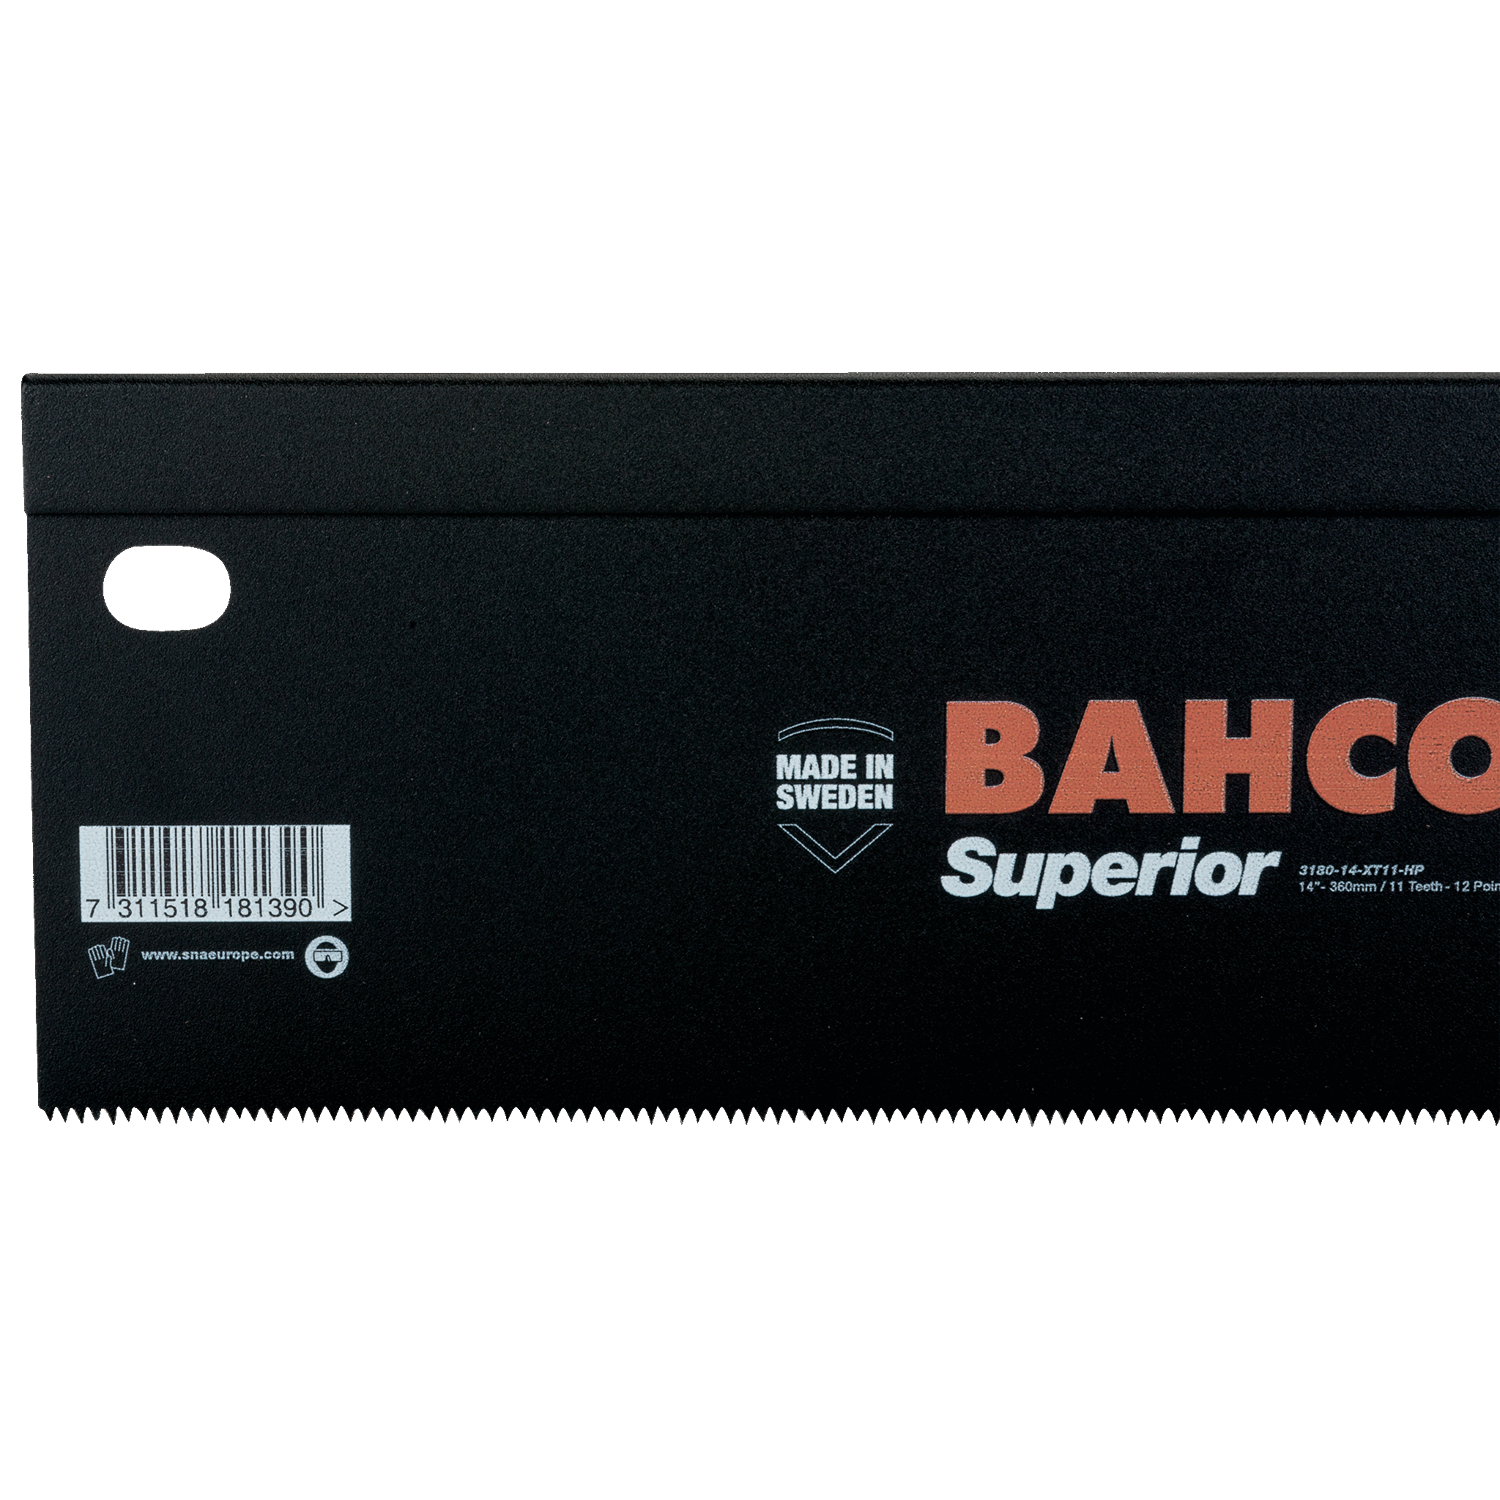 BAHCO 3180 ERGO Tenon Handsaw for Plastics/Laminates - Premium Handsaw from BAHCO - Shop now at Yew Aik.